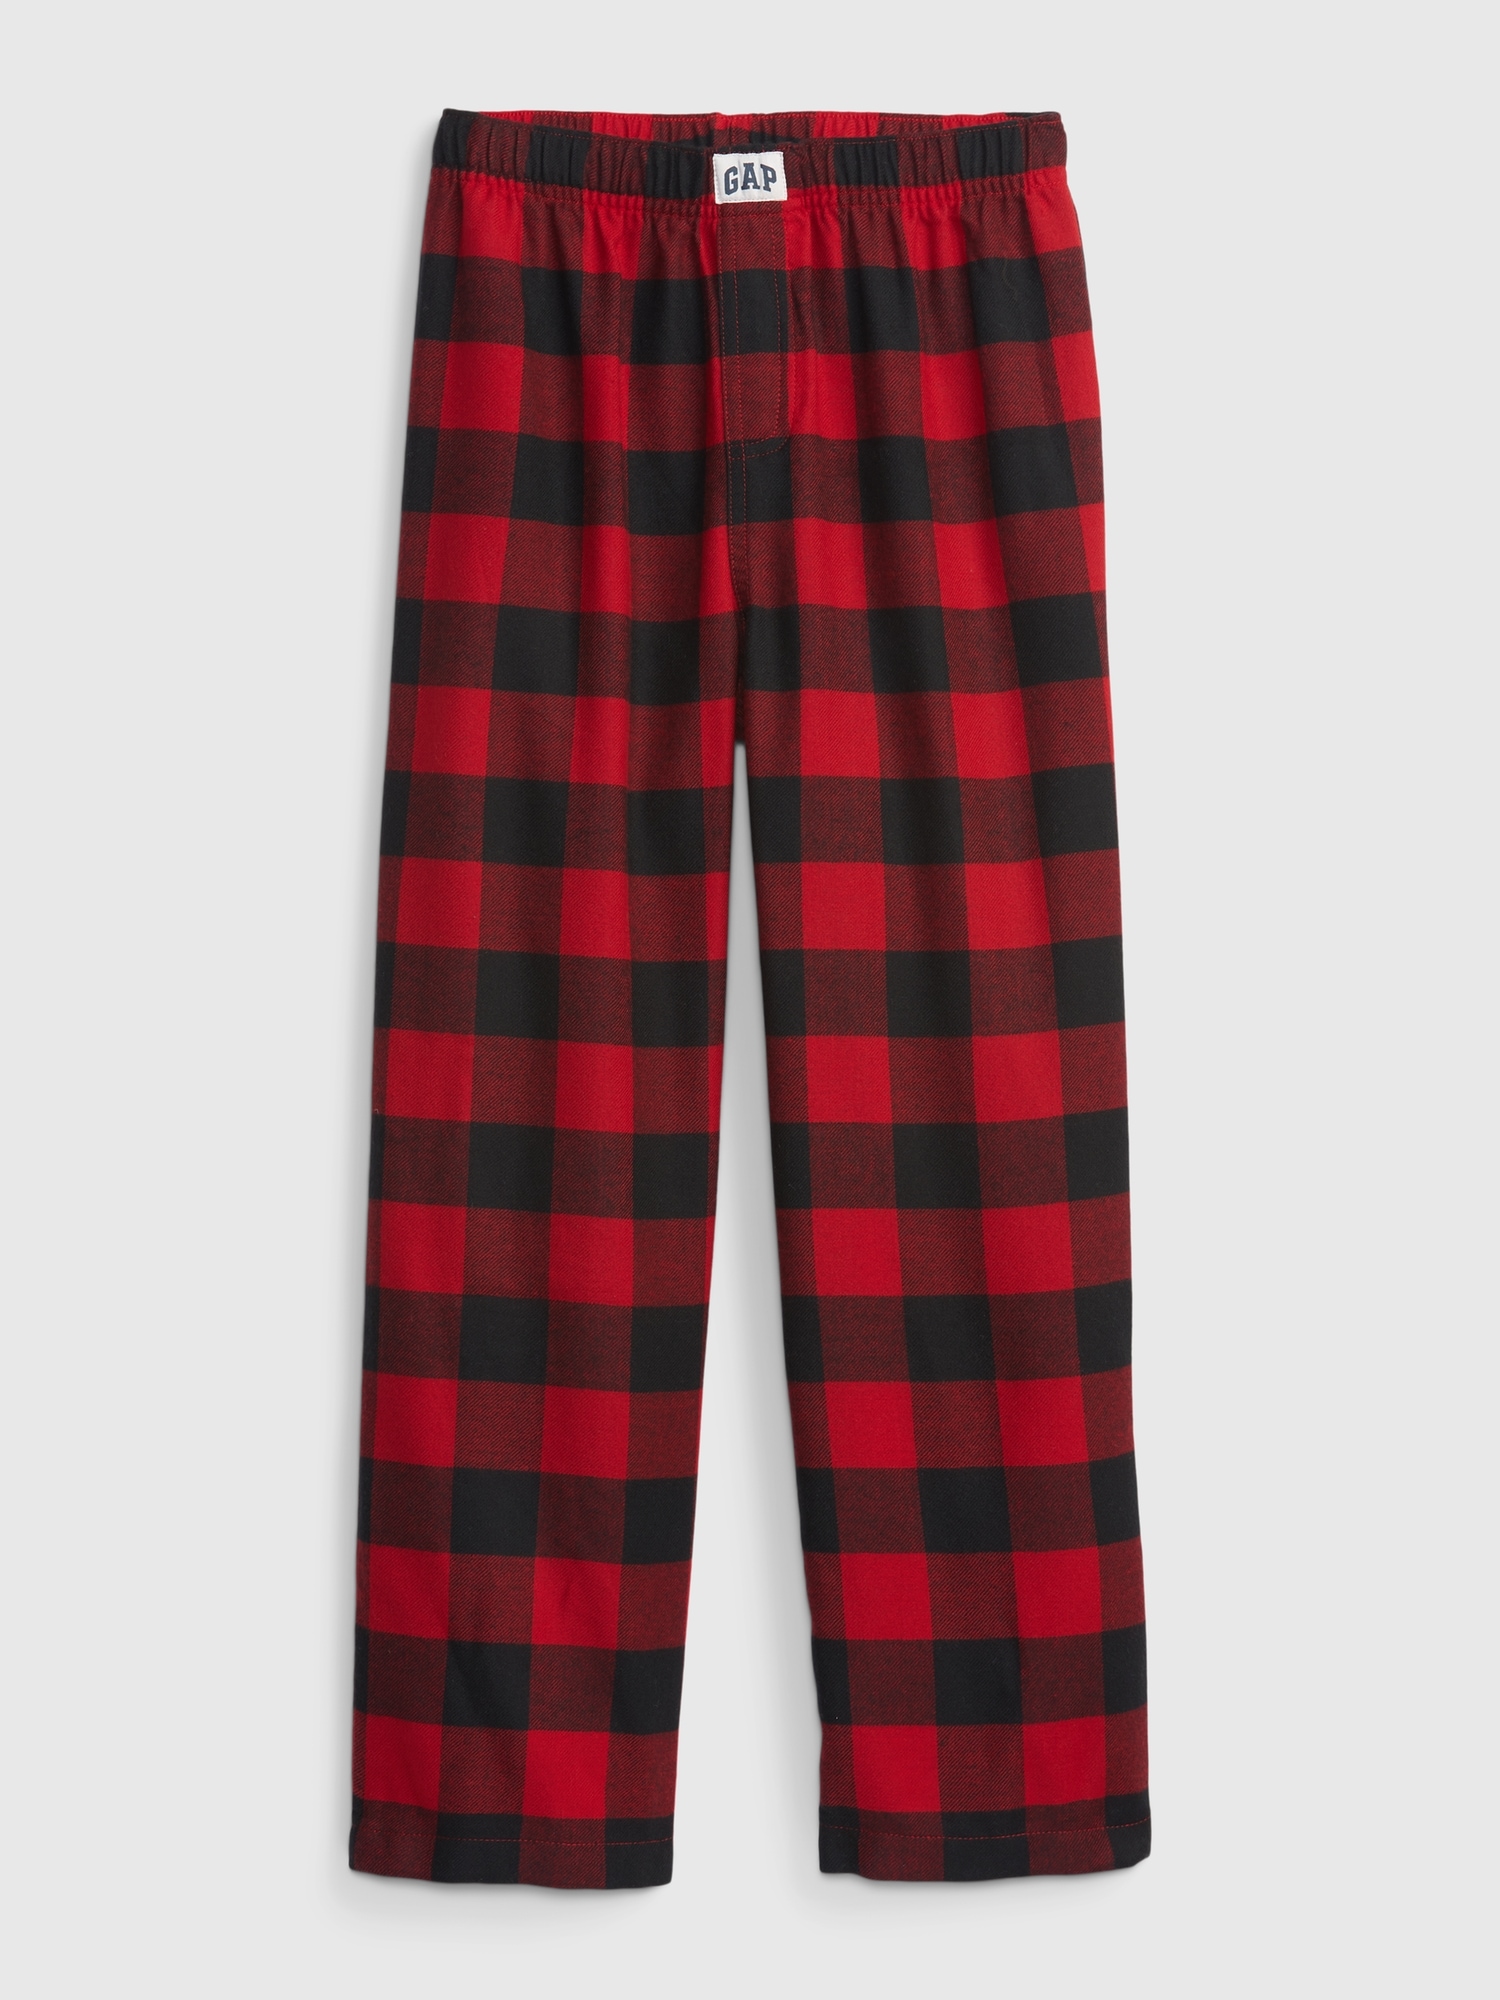 GAP Kids Boys Plaid Flannel Pajama Sleep Pants Bottoms Red White Blue Plaid  4